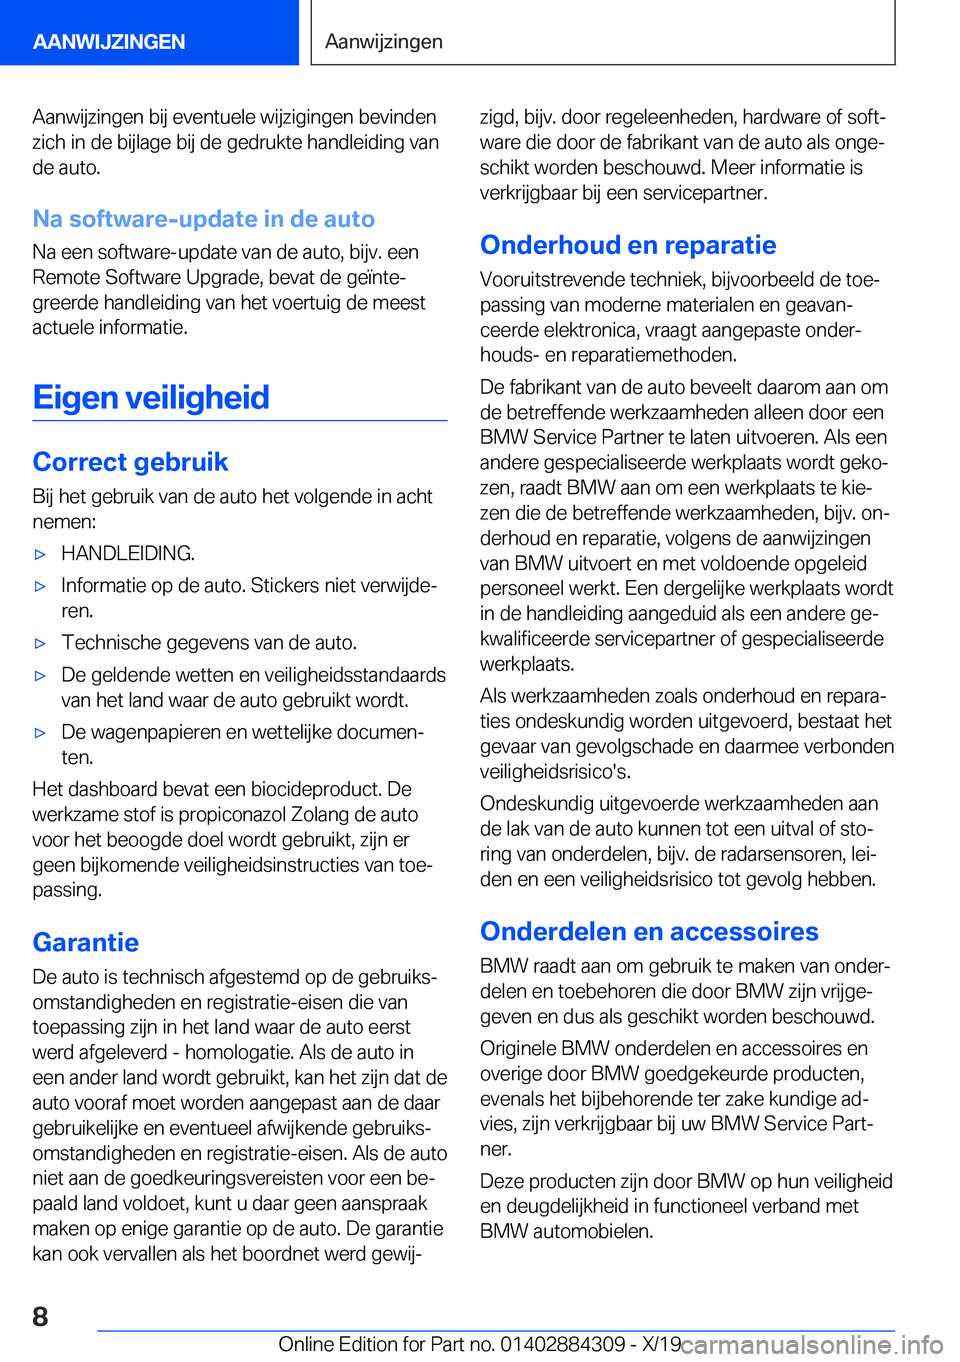 BMW 8 SERIES GRAN COUPE 2020  Instructieboekjes (in Dutch) �A�a�n�w�i�j�z�i�n�g�e�n��b�i�j��e�v�e�n�t�u�e�l�e��w�i�j�z�i�g�i�n�g�e�n��b�e�v�i�n�d�e�n�z�i�c�h��i�n��d�e��b�i�j�l�a�g�e��b�i�j��d�e��g�e�d�r�u�k�t�e��h�a�n�d�l�e�i�d�i�n�g��v�a�n
�d�e�